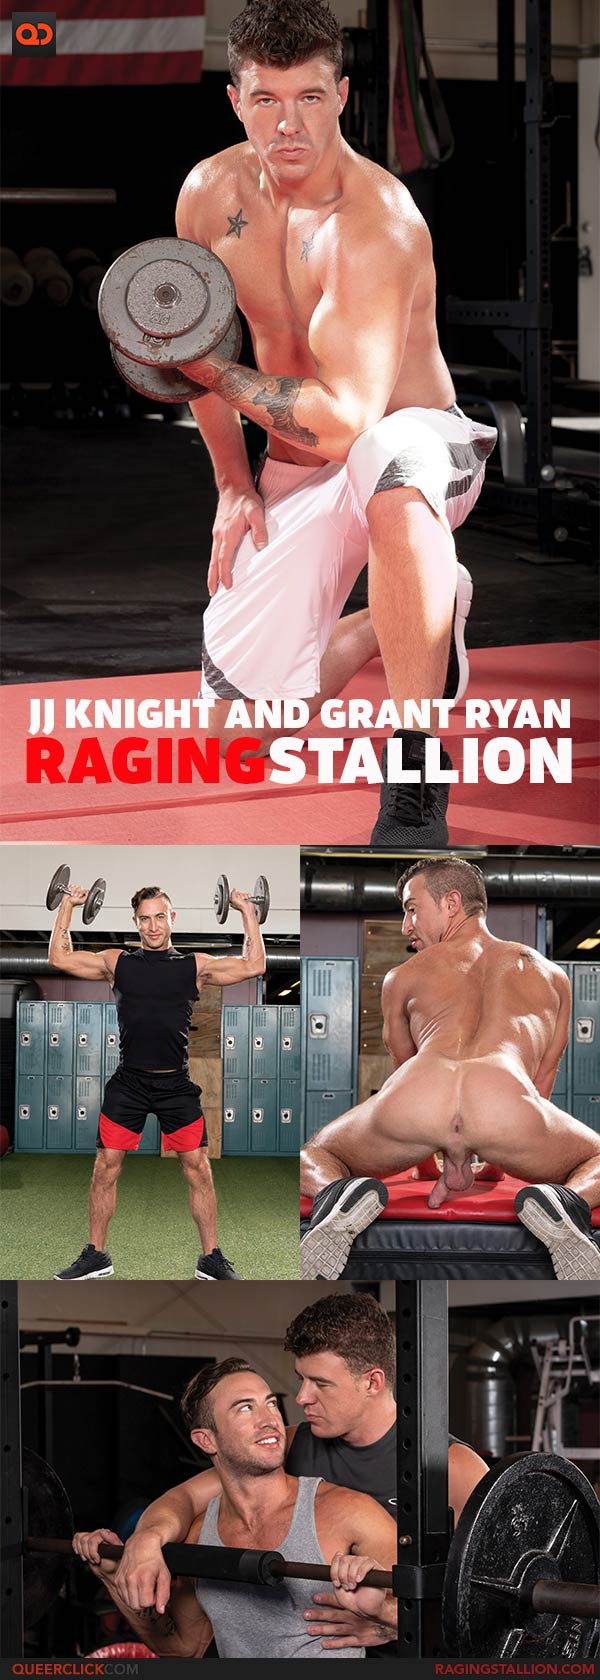 Raging Stallion: JJ Knight and Grant Ryan